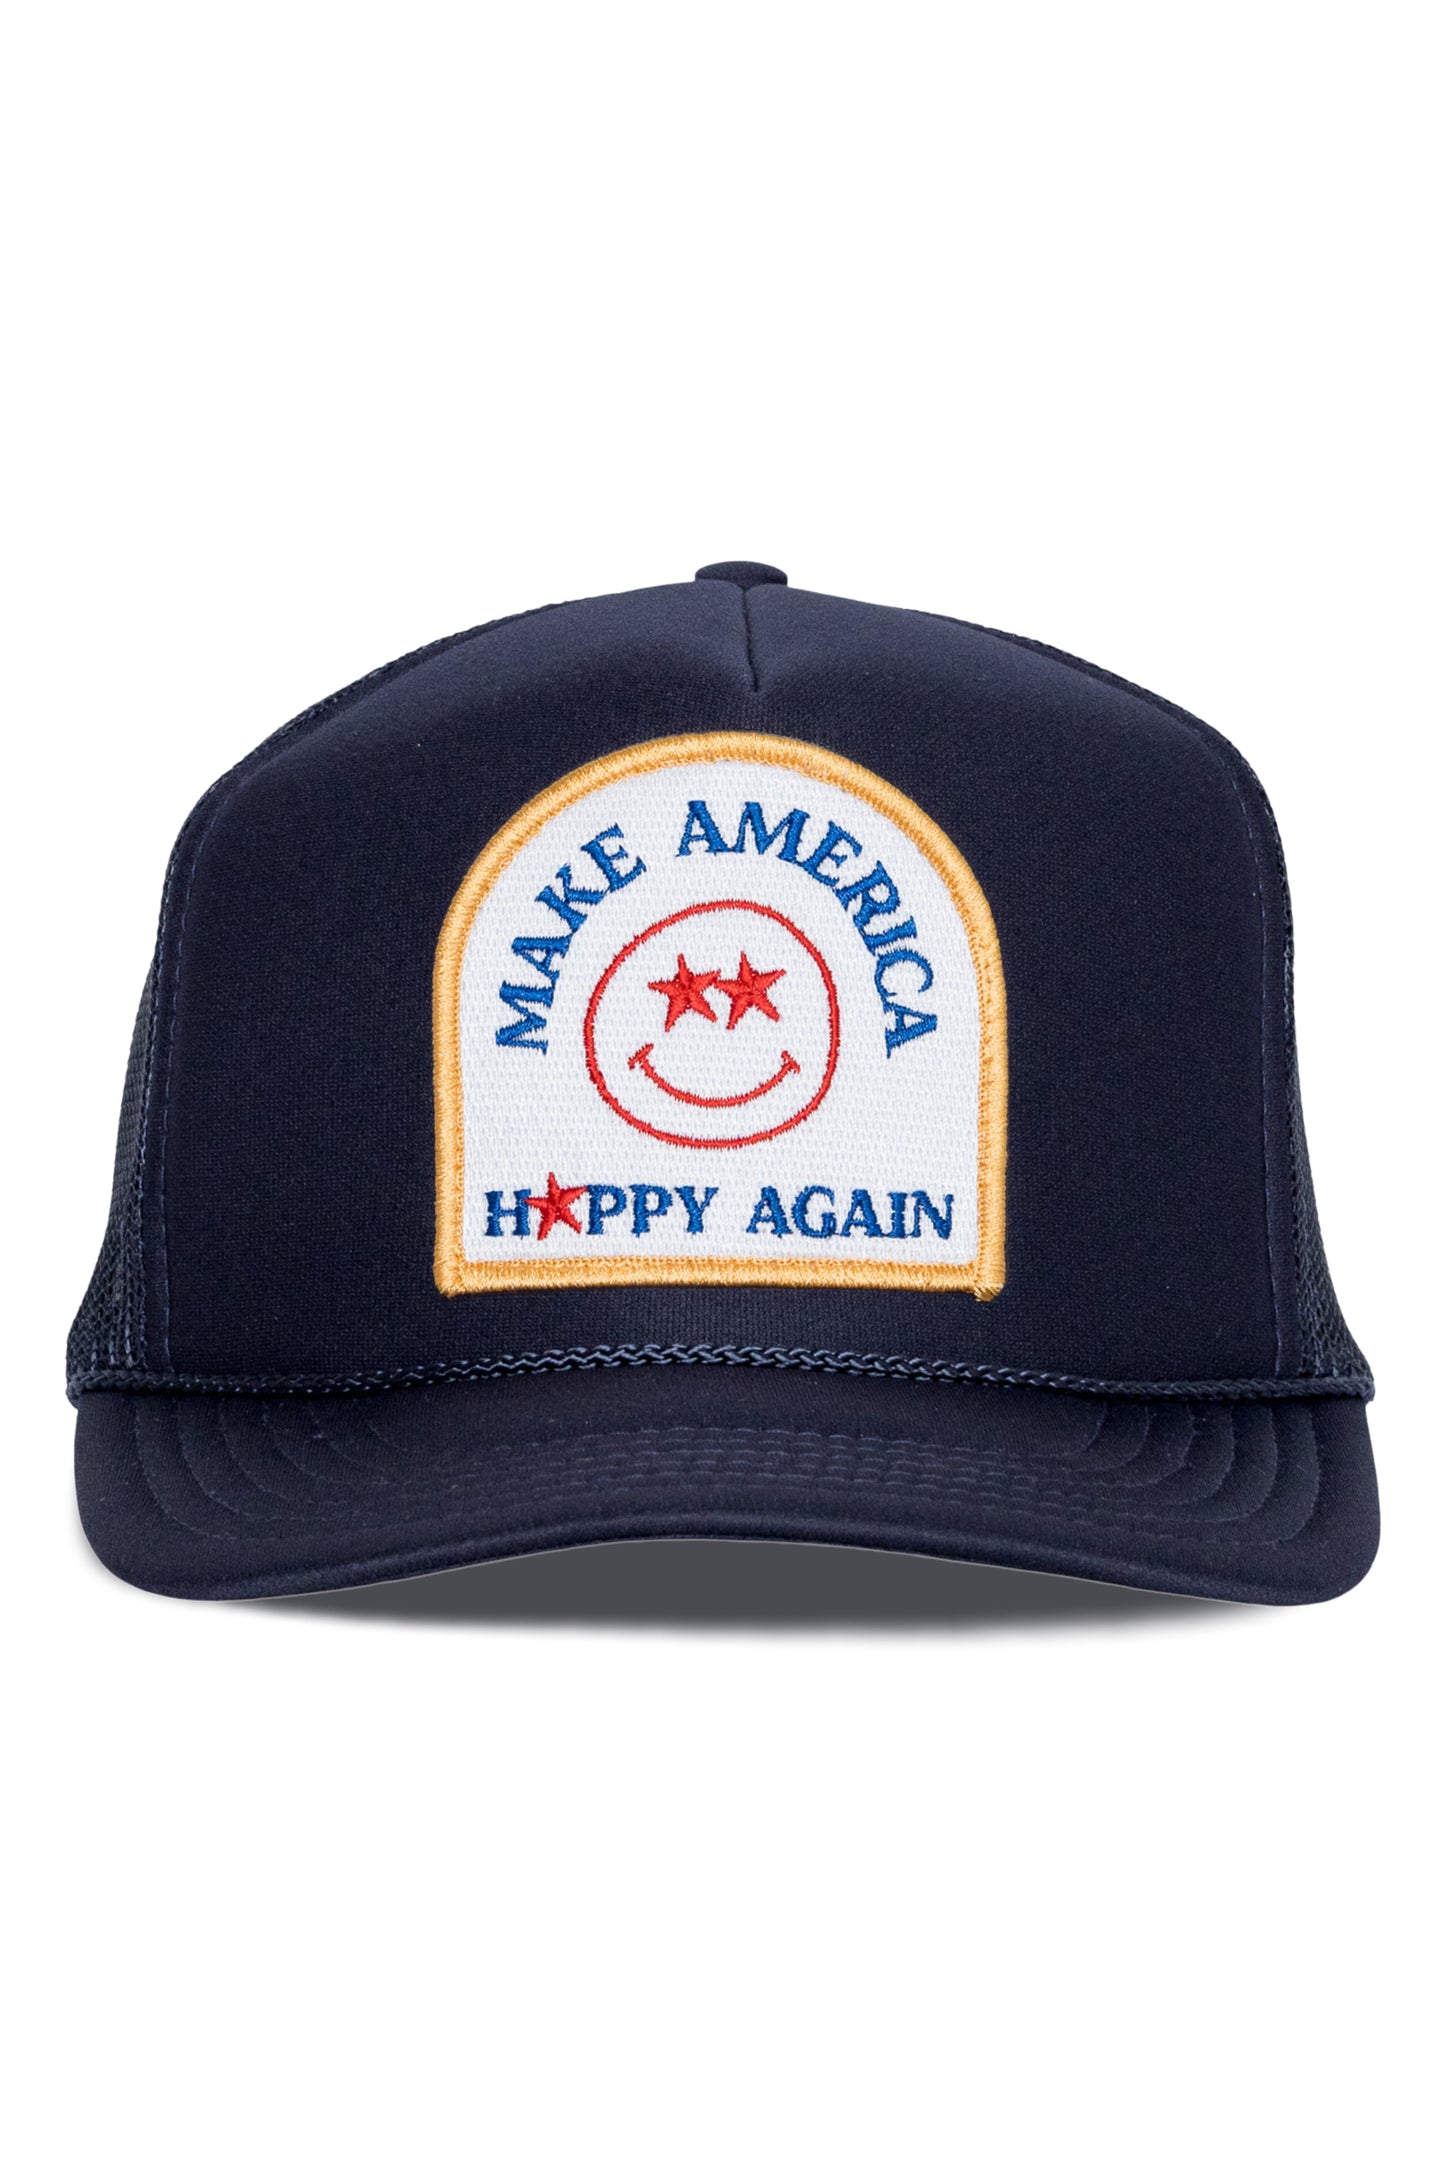 Make America Happy Again - Navy